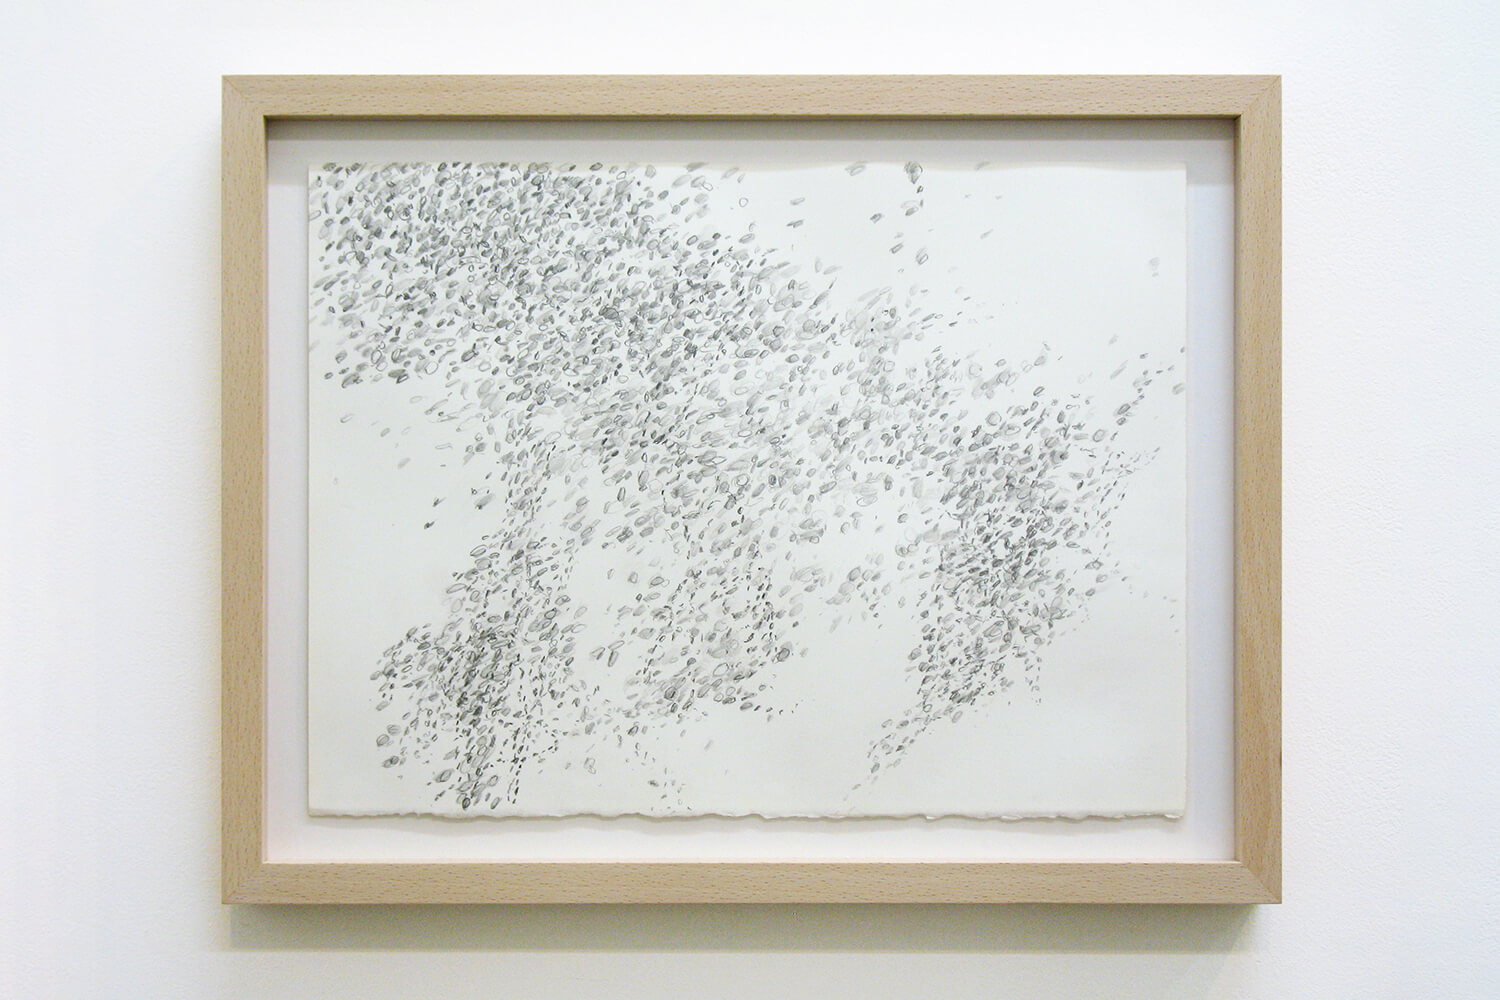 When the Dust Settles (d16)<br>Pencil on paper, 28.5 x 38 cm, 2011